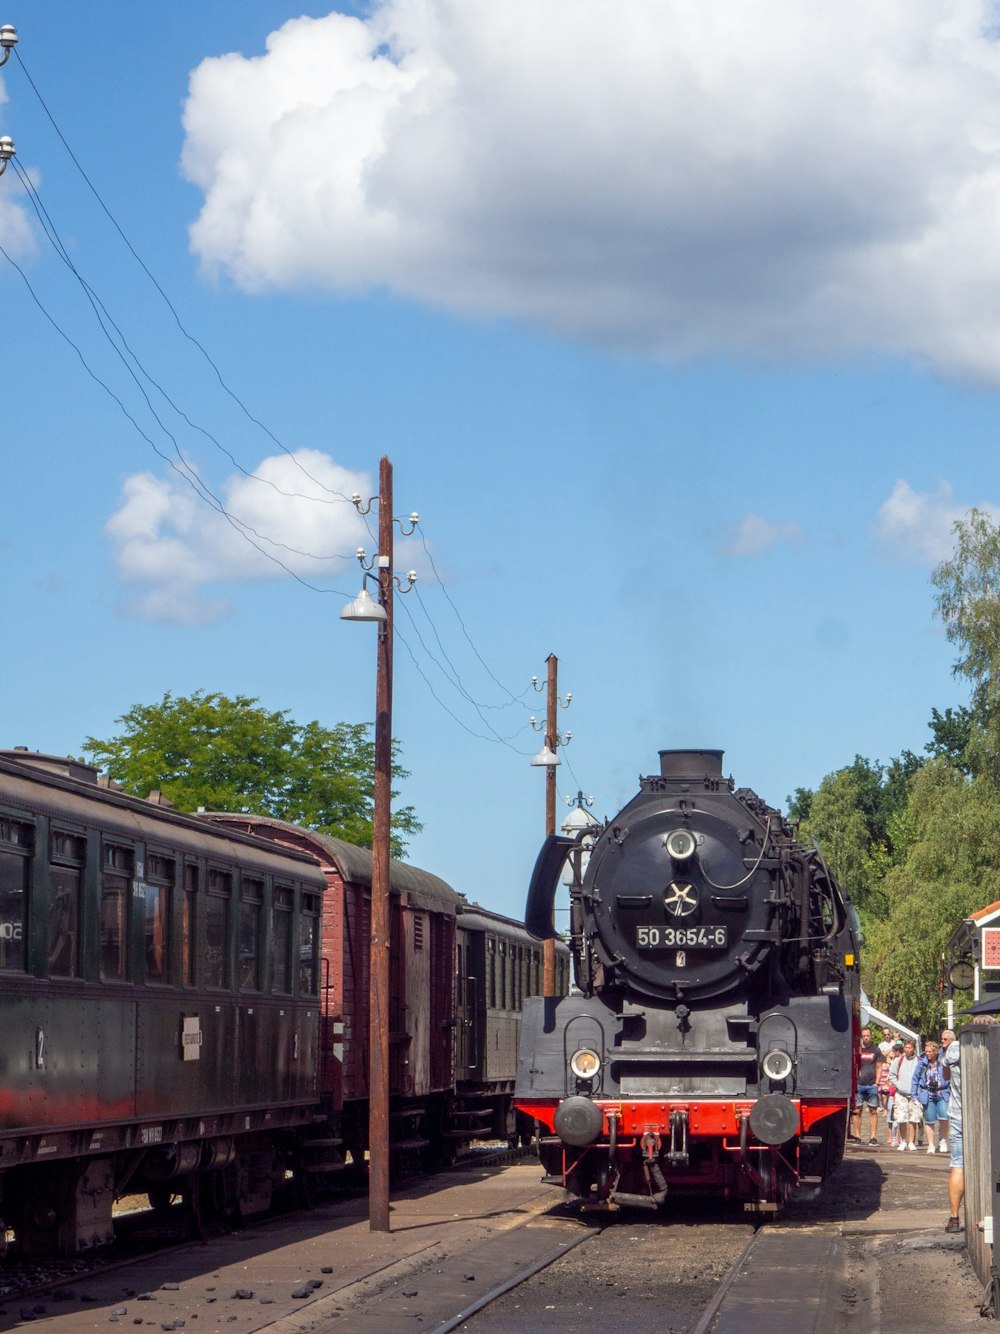 black train on rail under blue sky during daytime